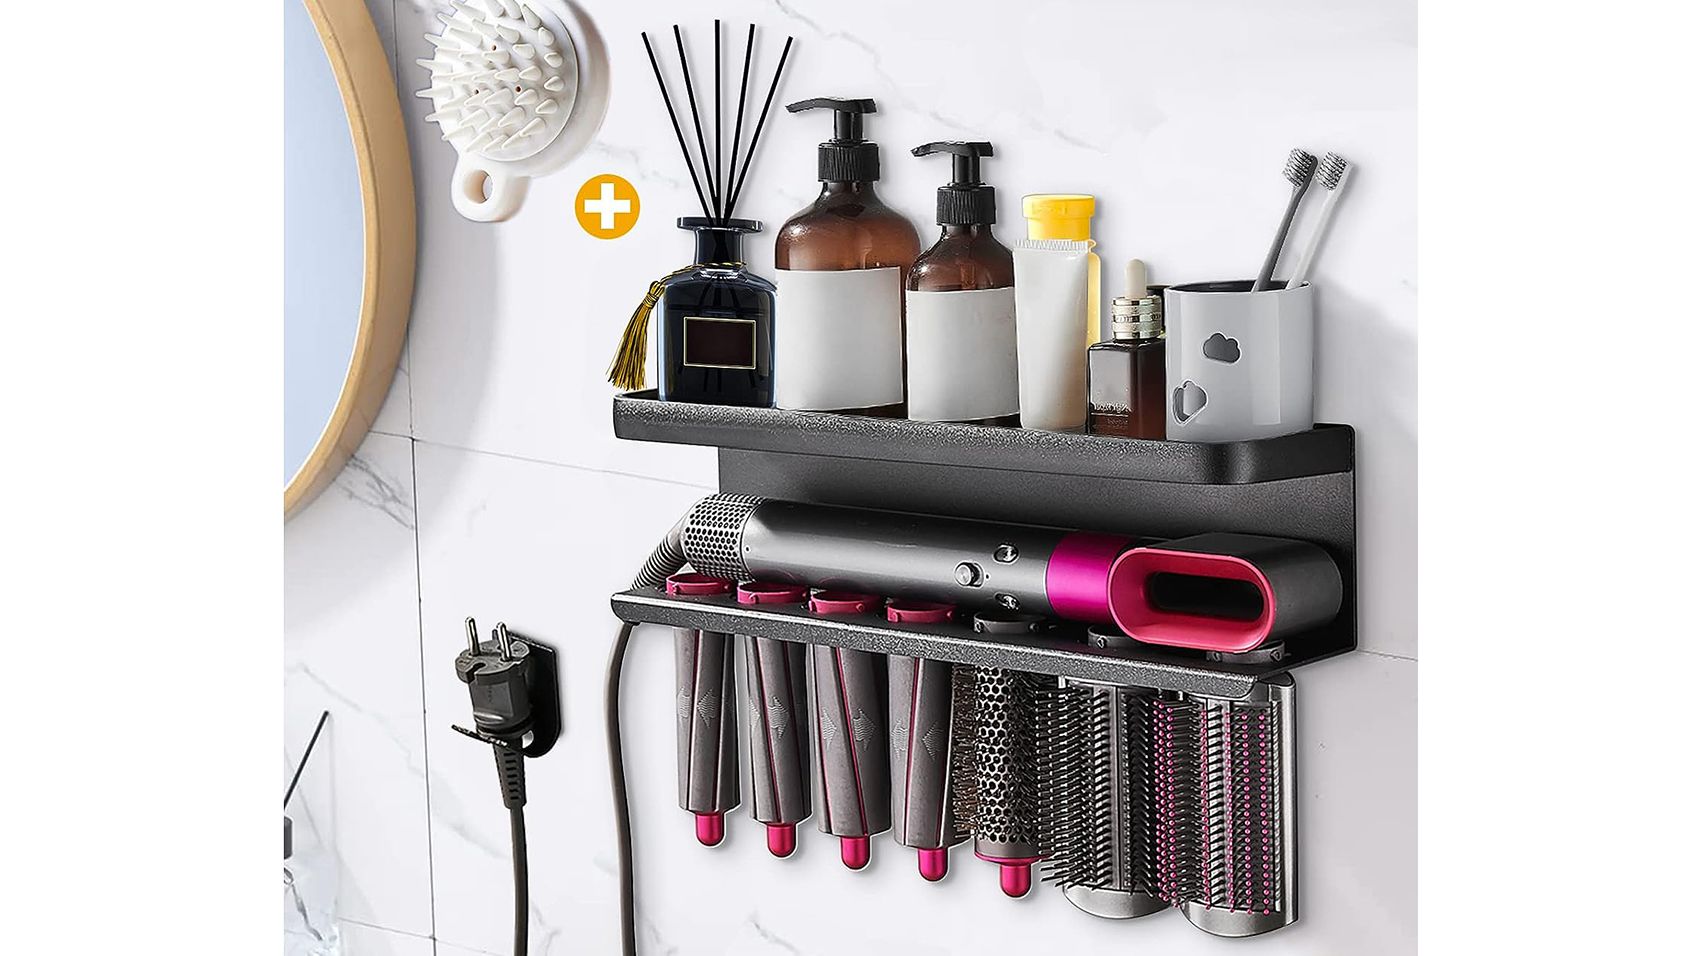 My Hair Product Tools Storage + Organization Tips - Naptural85